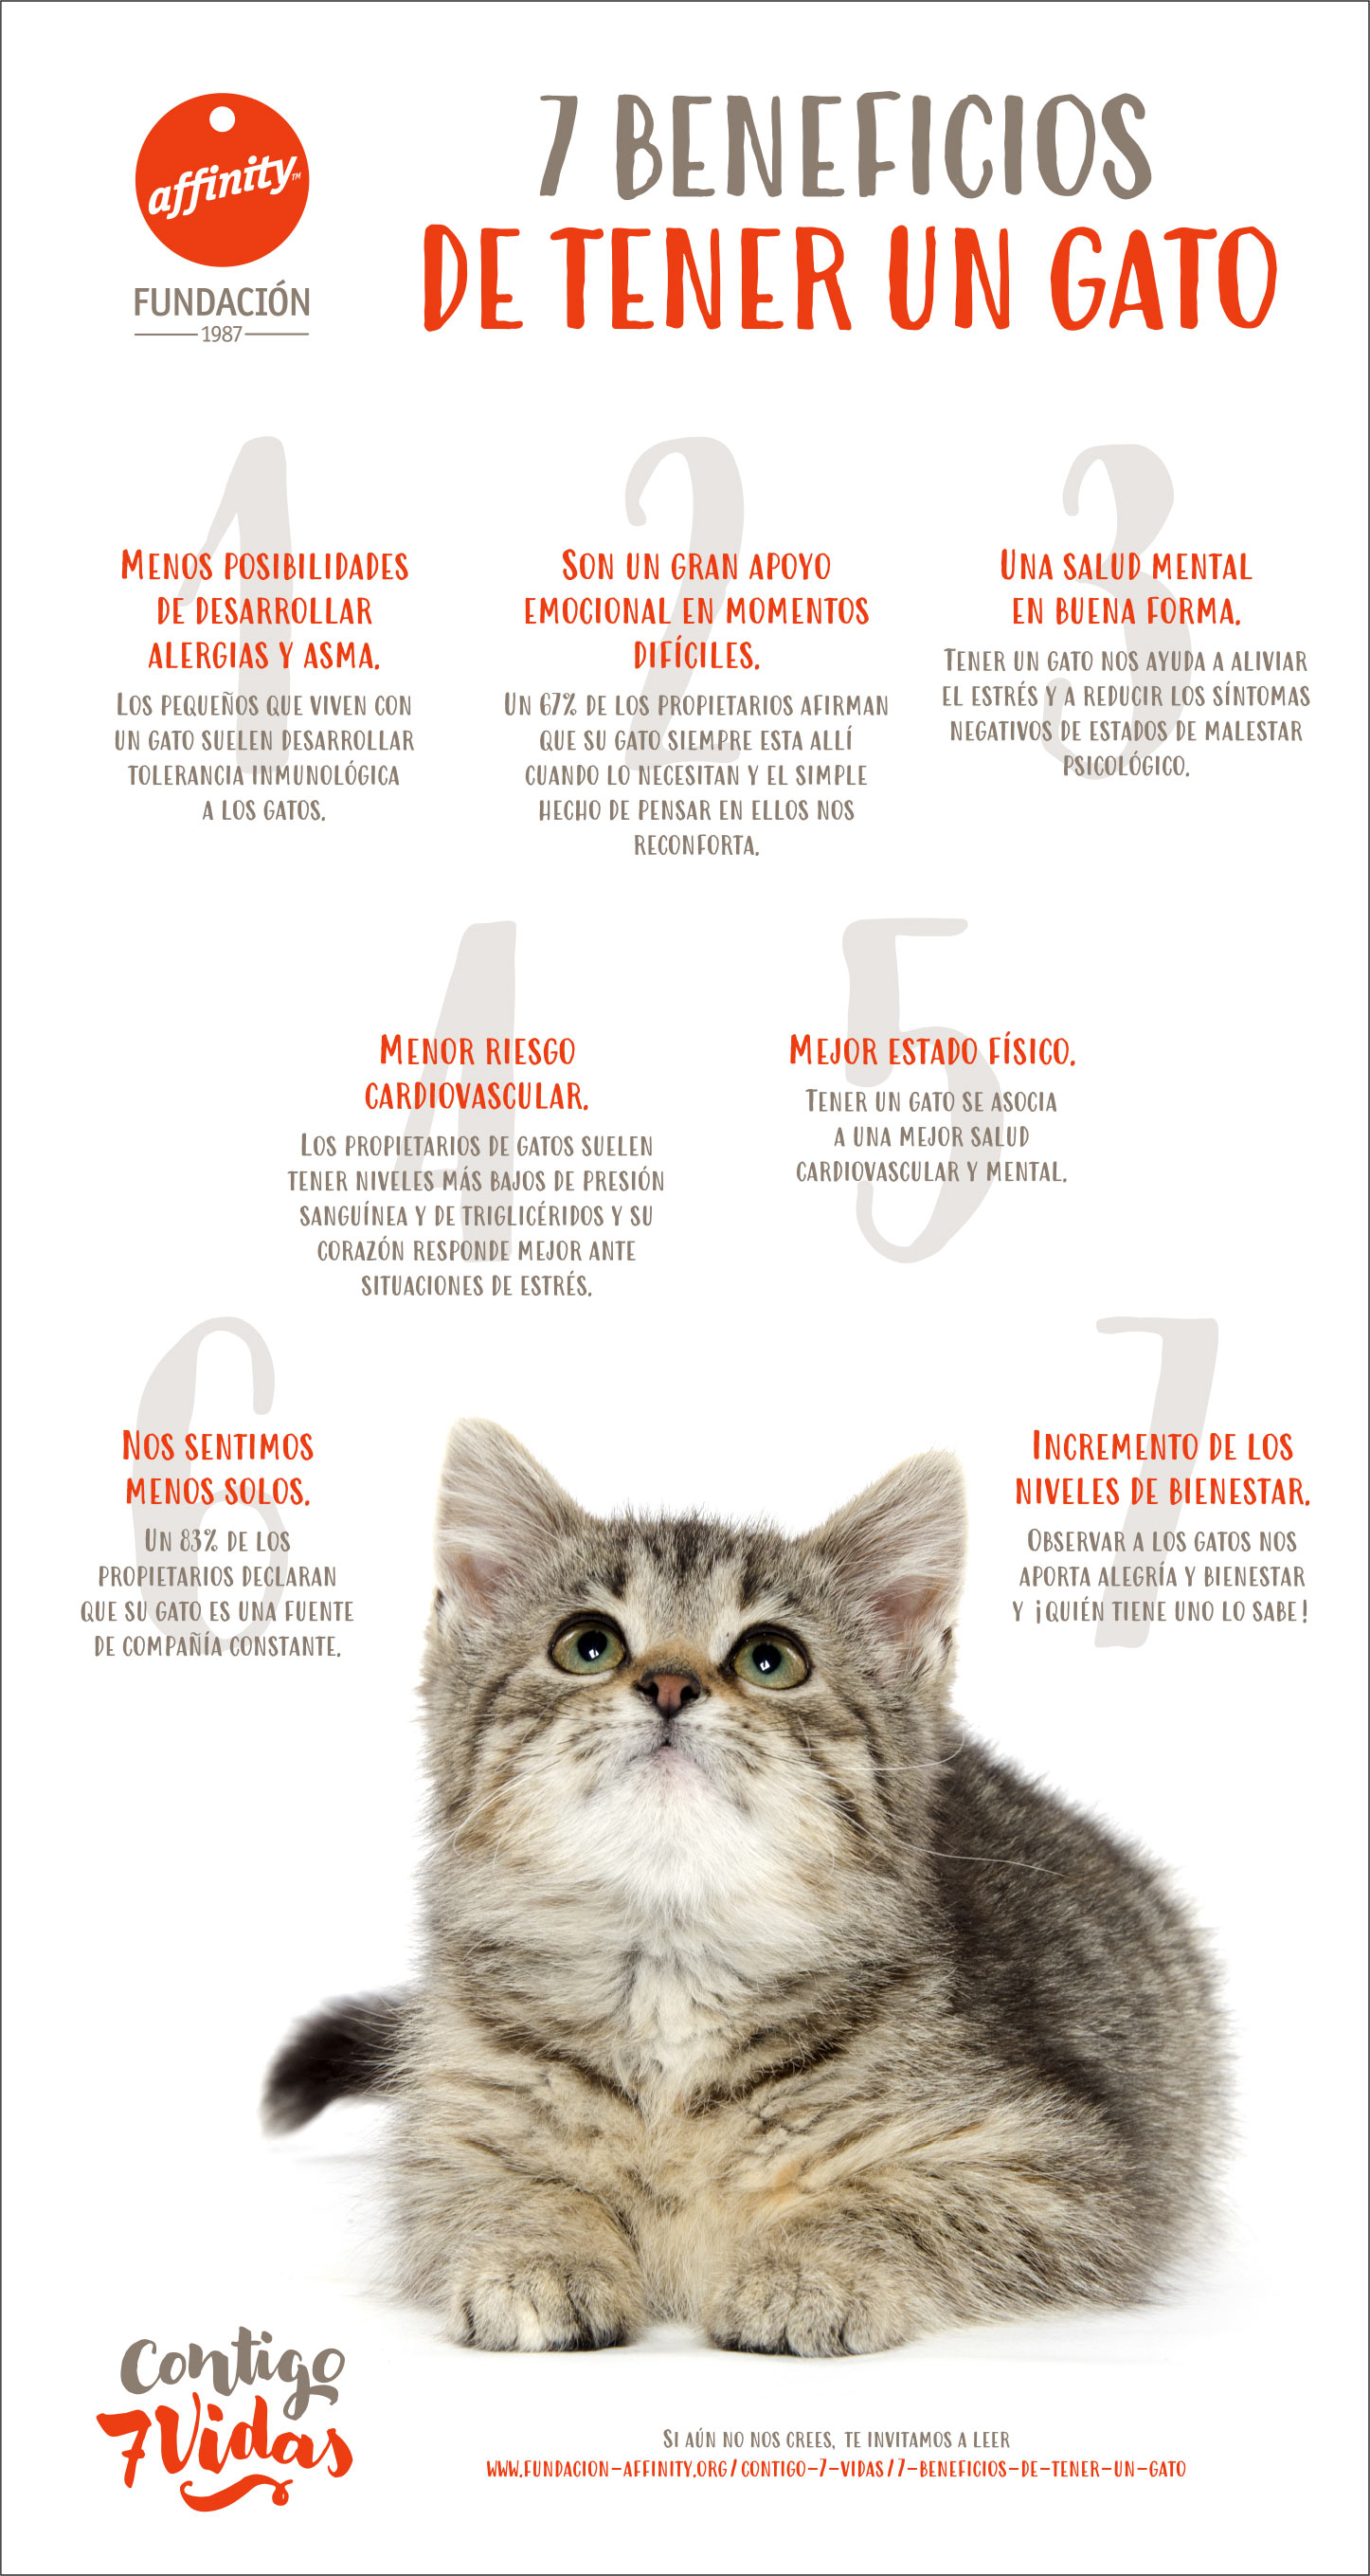 7 Beneficios de tener un gato 